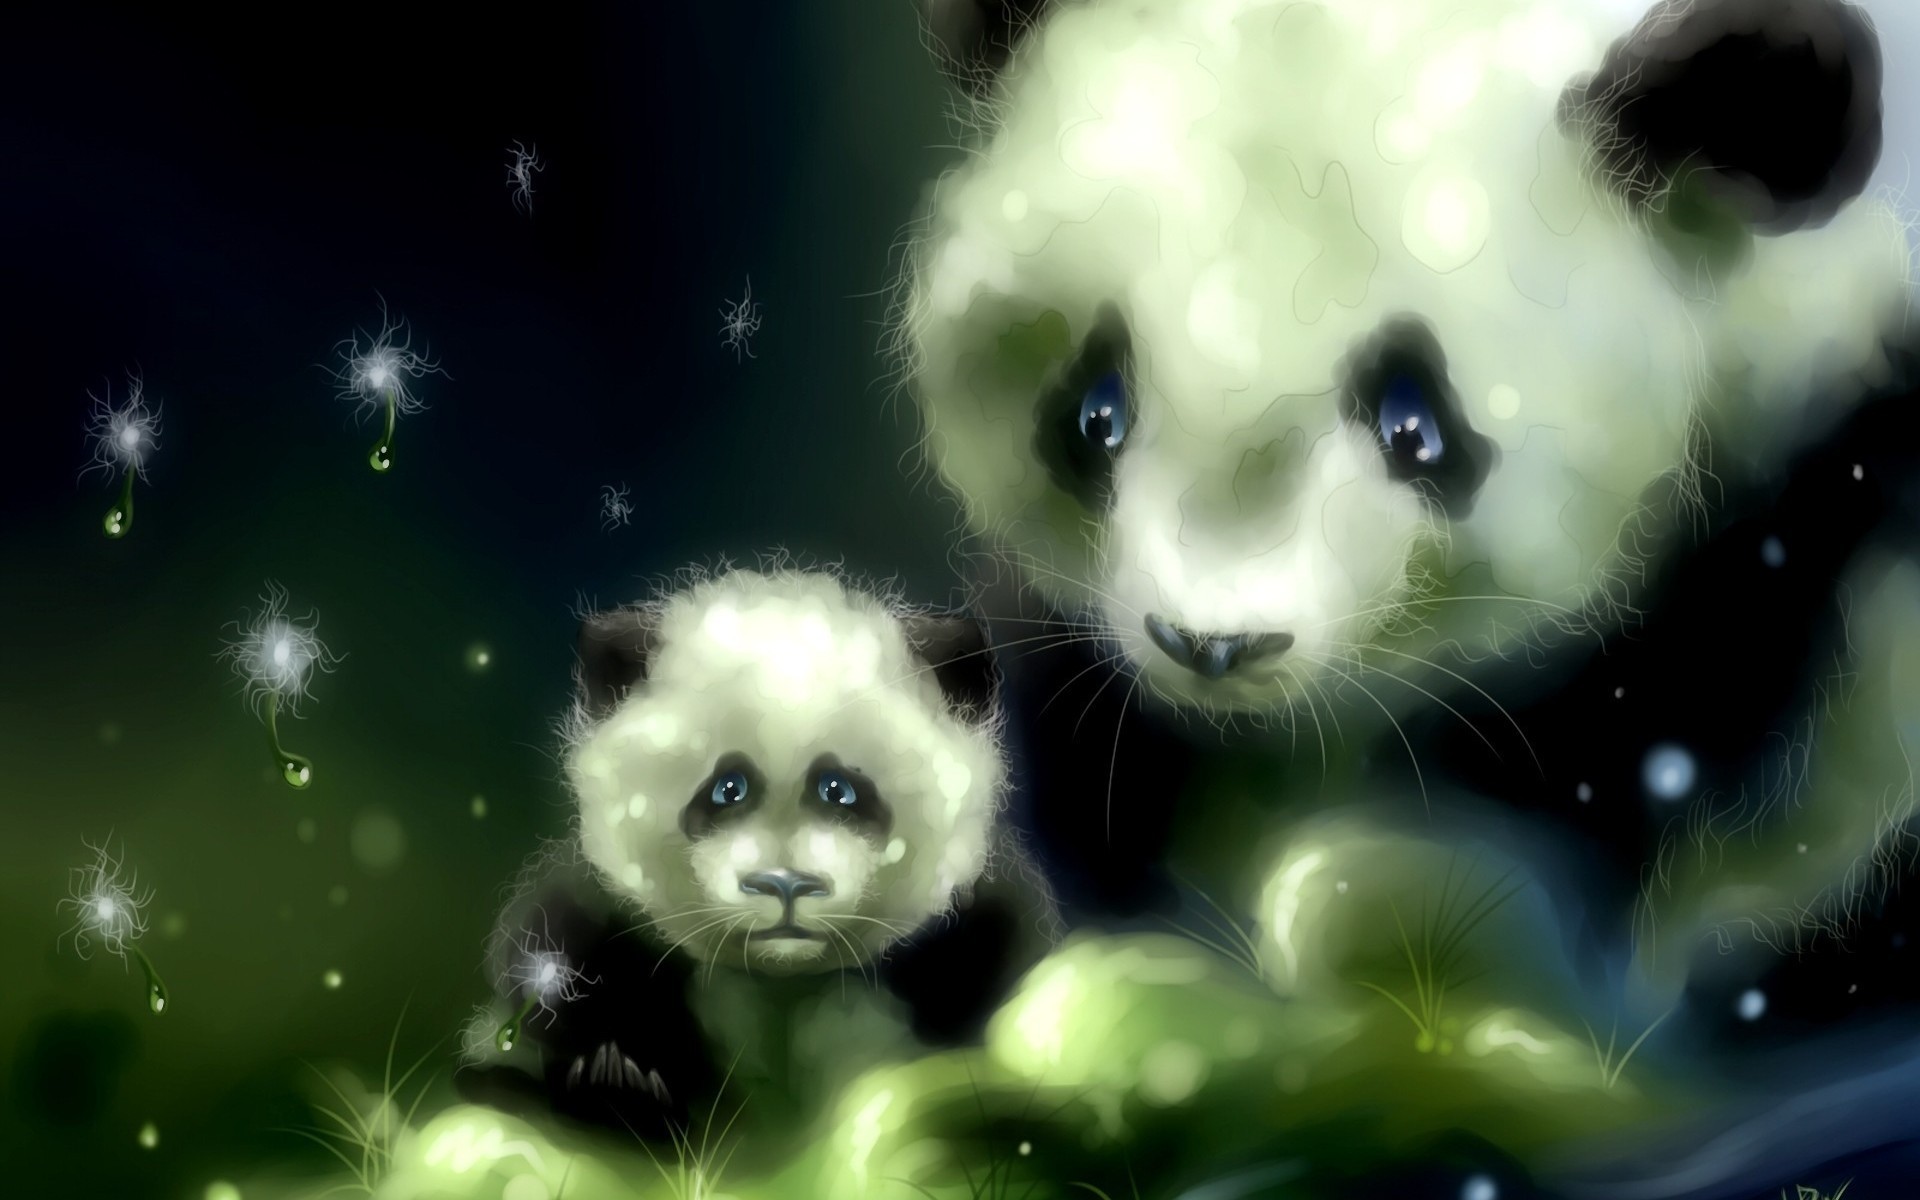 A panda bear and cub are seen in this artistic image. - Panda